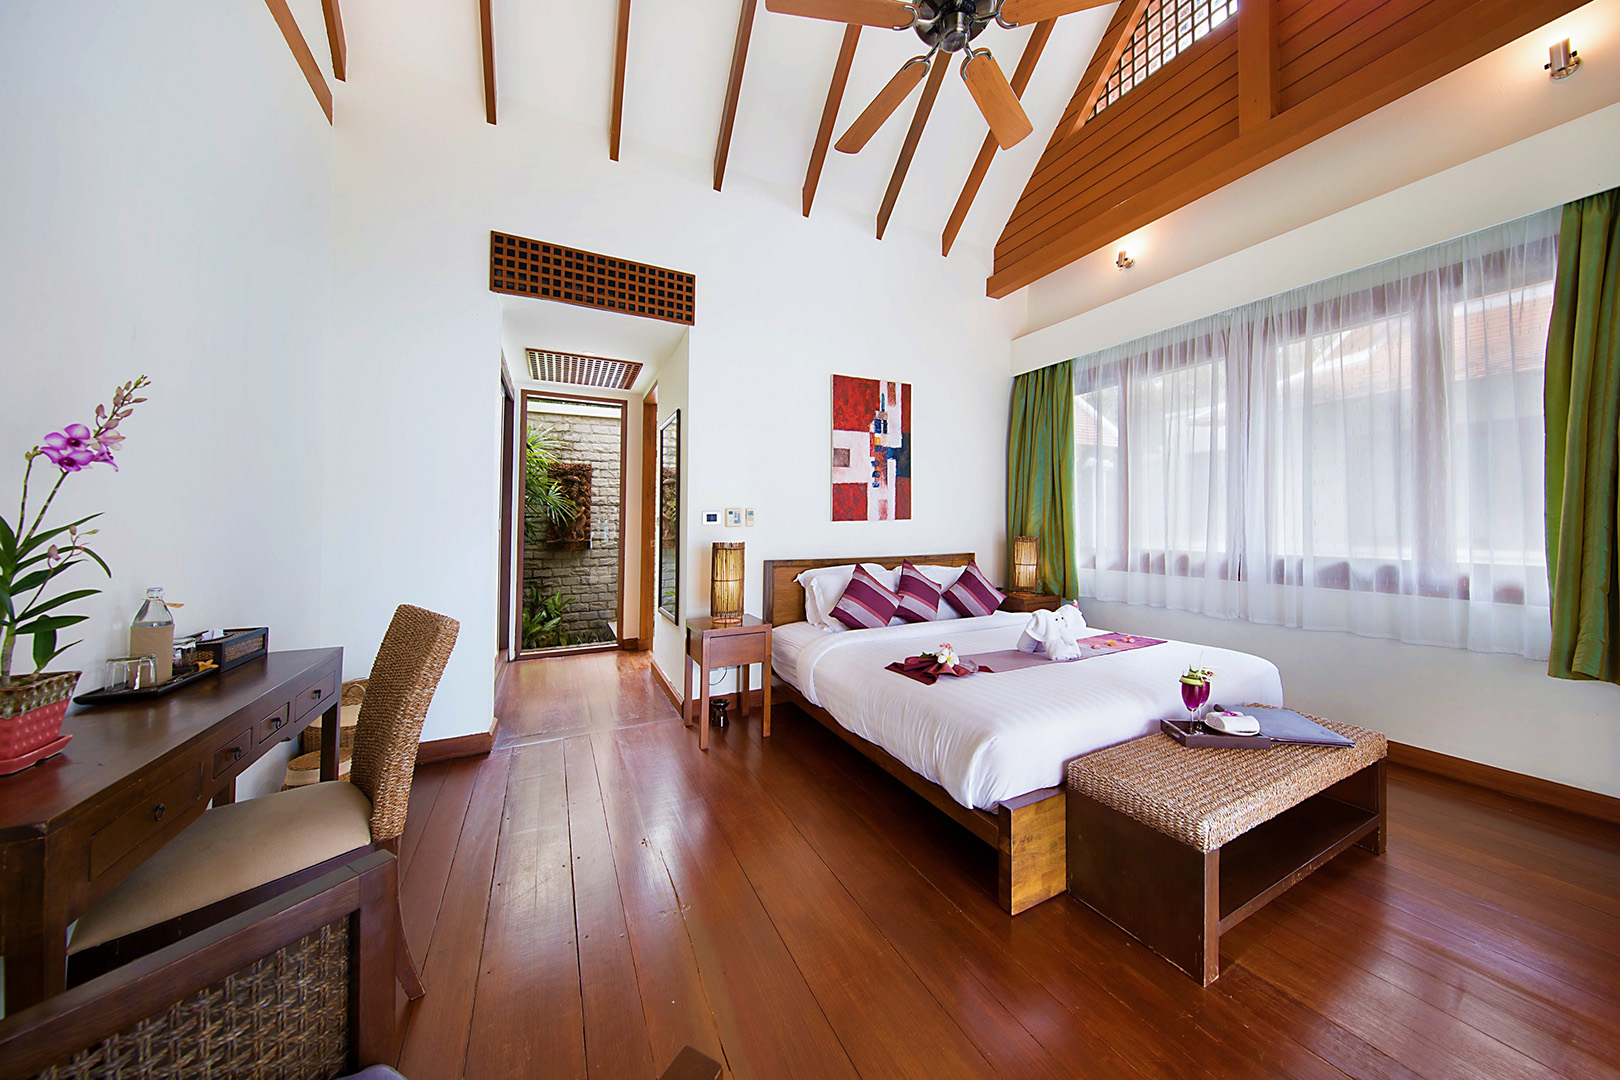 Classic 5 Bedroom Beachfront Villa in Lipa Noi for sale: Classic 5 Bedroom Beachfront Villa in Lipa Noi